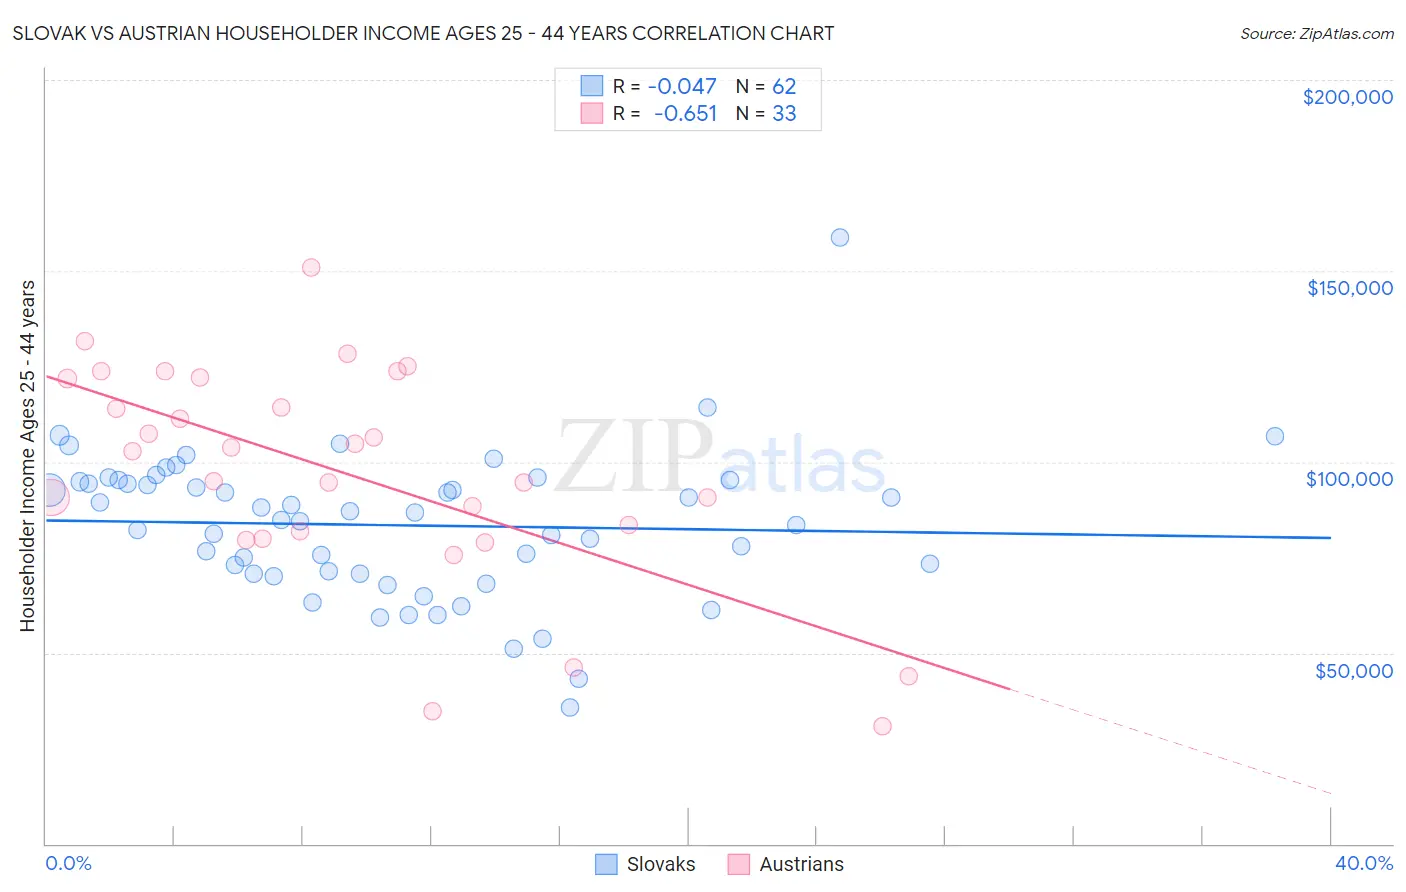 Slovak vs Austrian Householder Income Ages 25 - 44 years